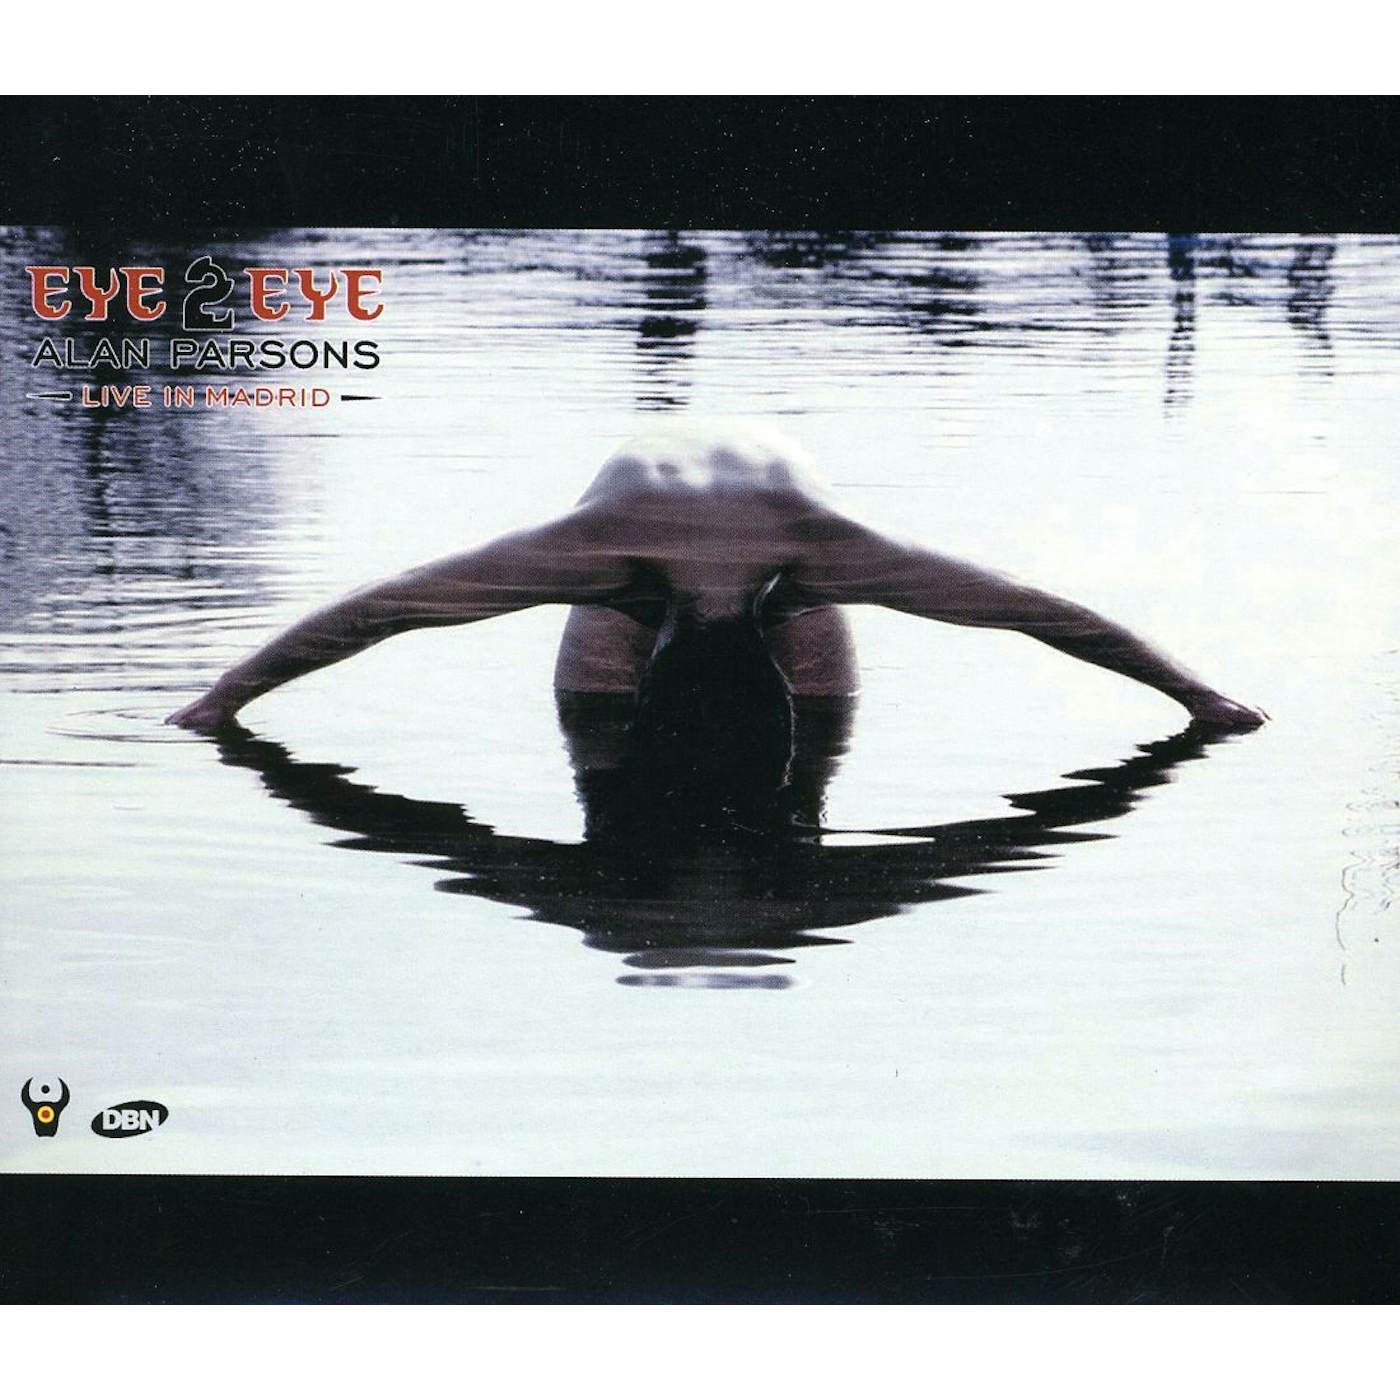 The Alan Parsons Project EYE 2 EYE CD